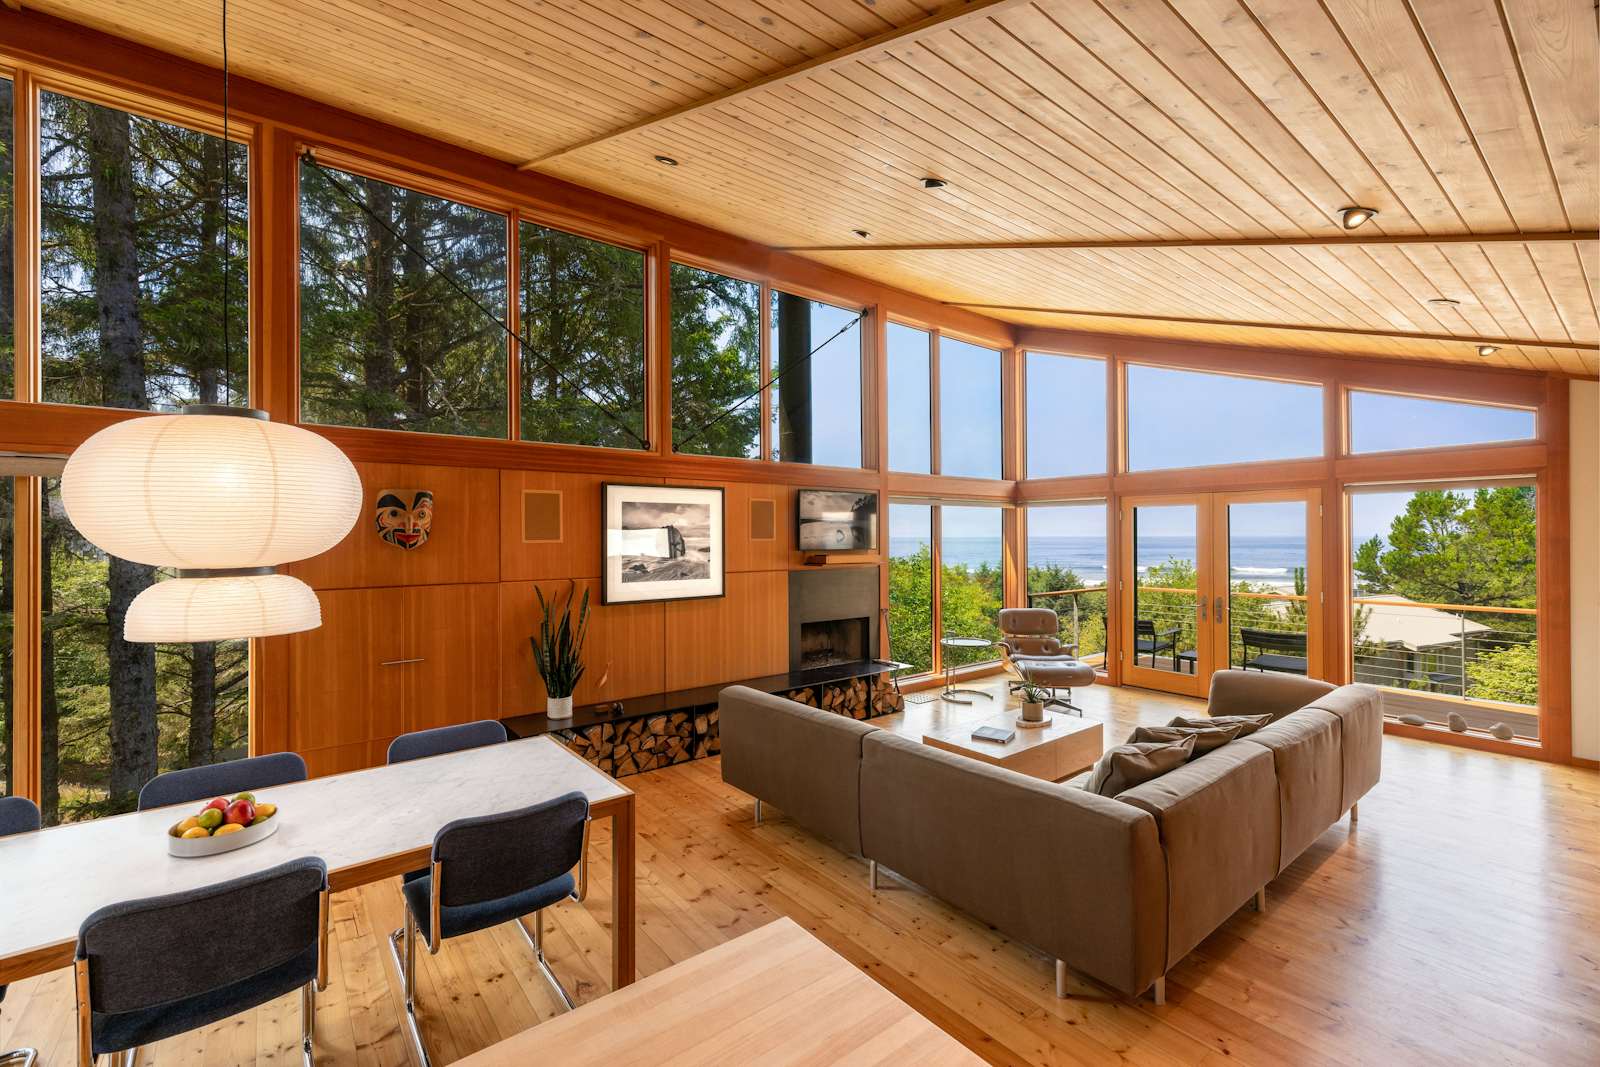 An Award-Winning Oregon Cabin Awash in Cozy, Coastal Vibes Seeks $1.77M ...